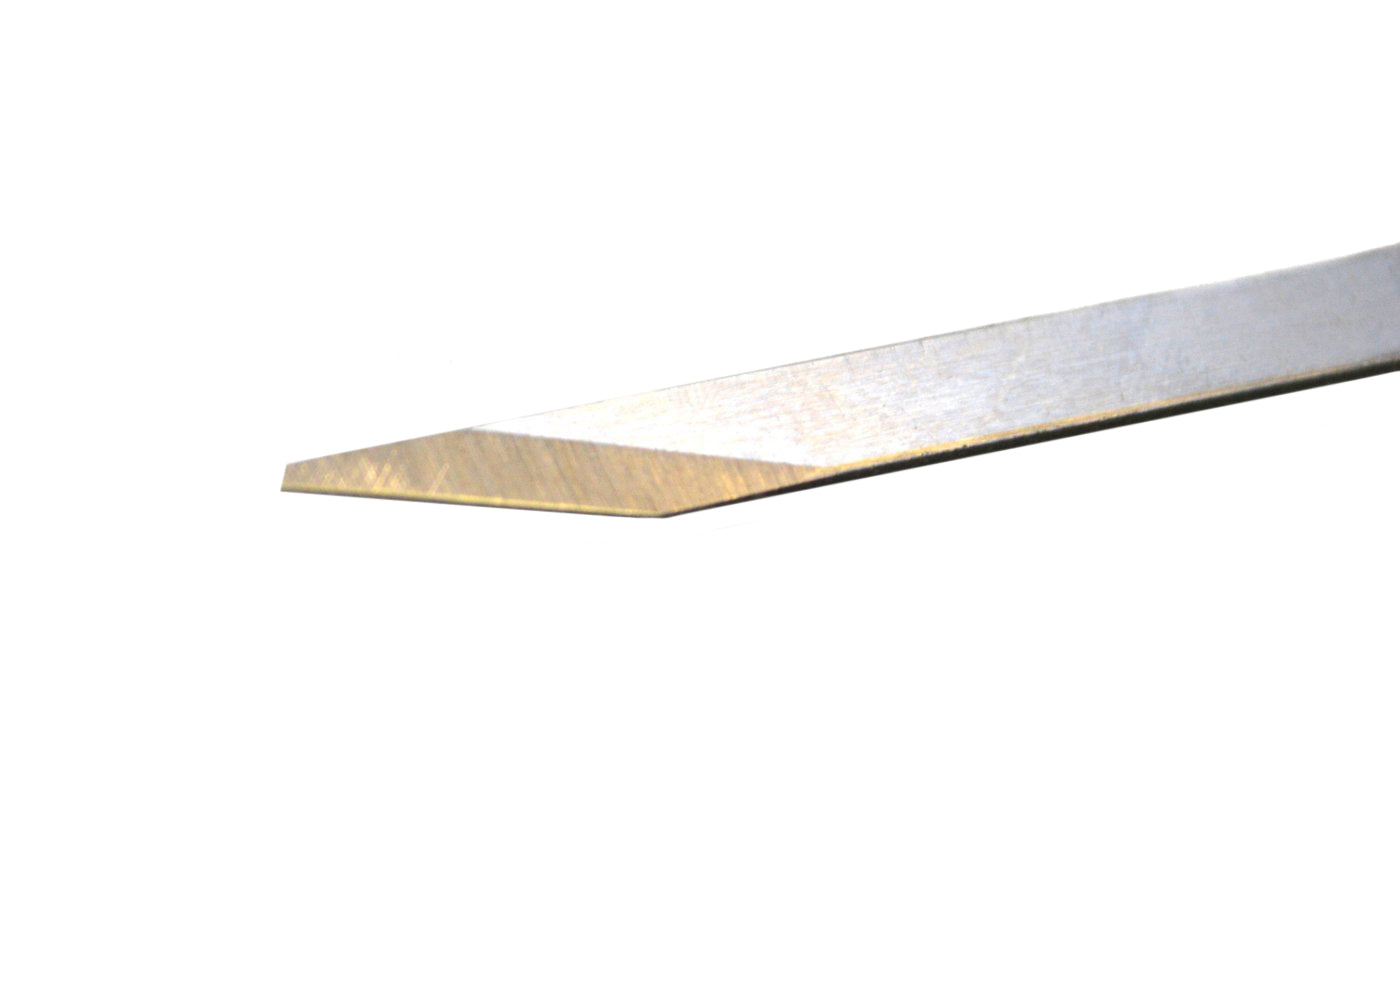 Vergez Blanchard Strap Cutter / Plough with Blade (2 sizes)